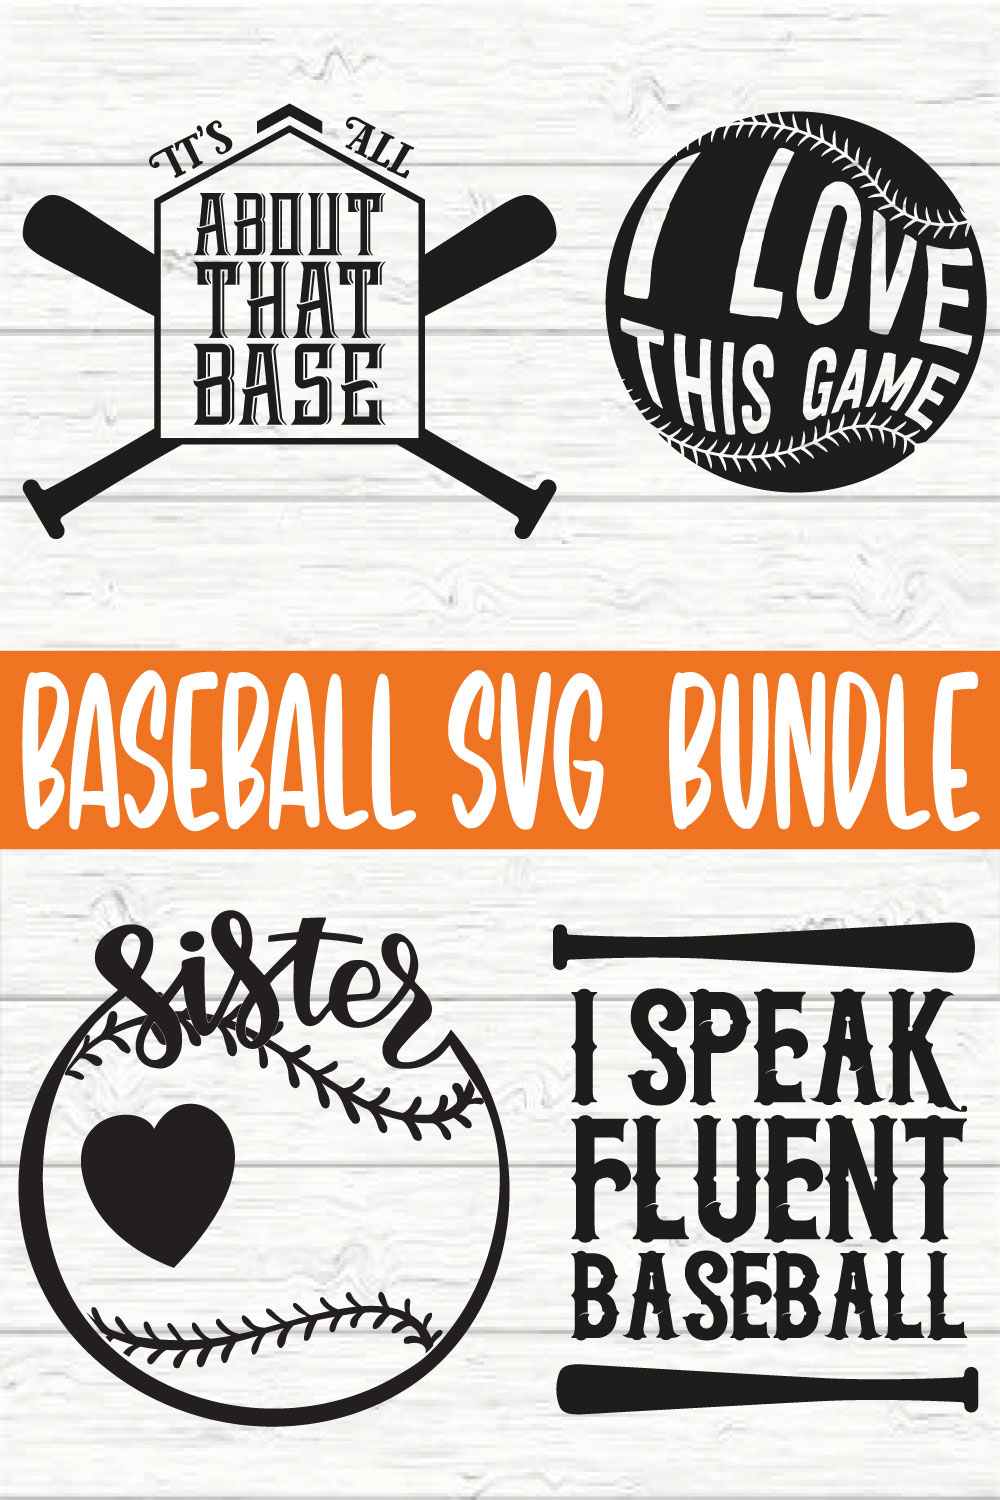 Baseball Typography Design Bundle vol 4 pinterest preview image.